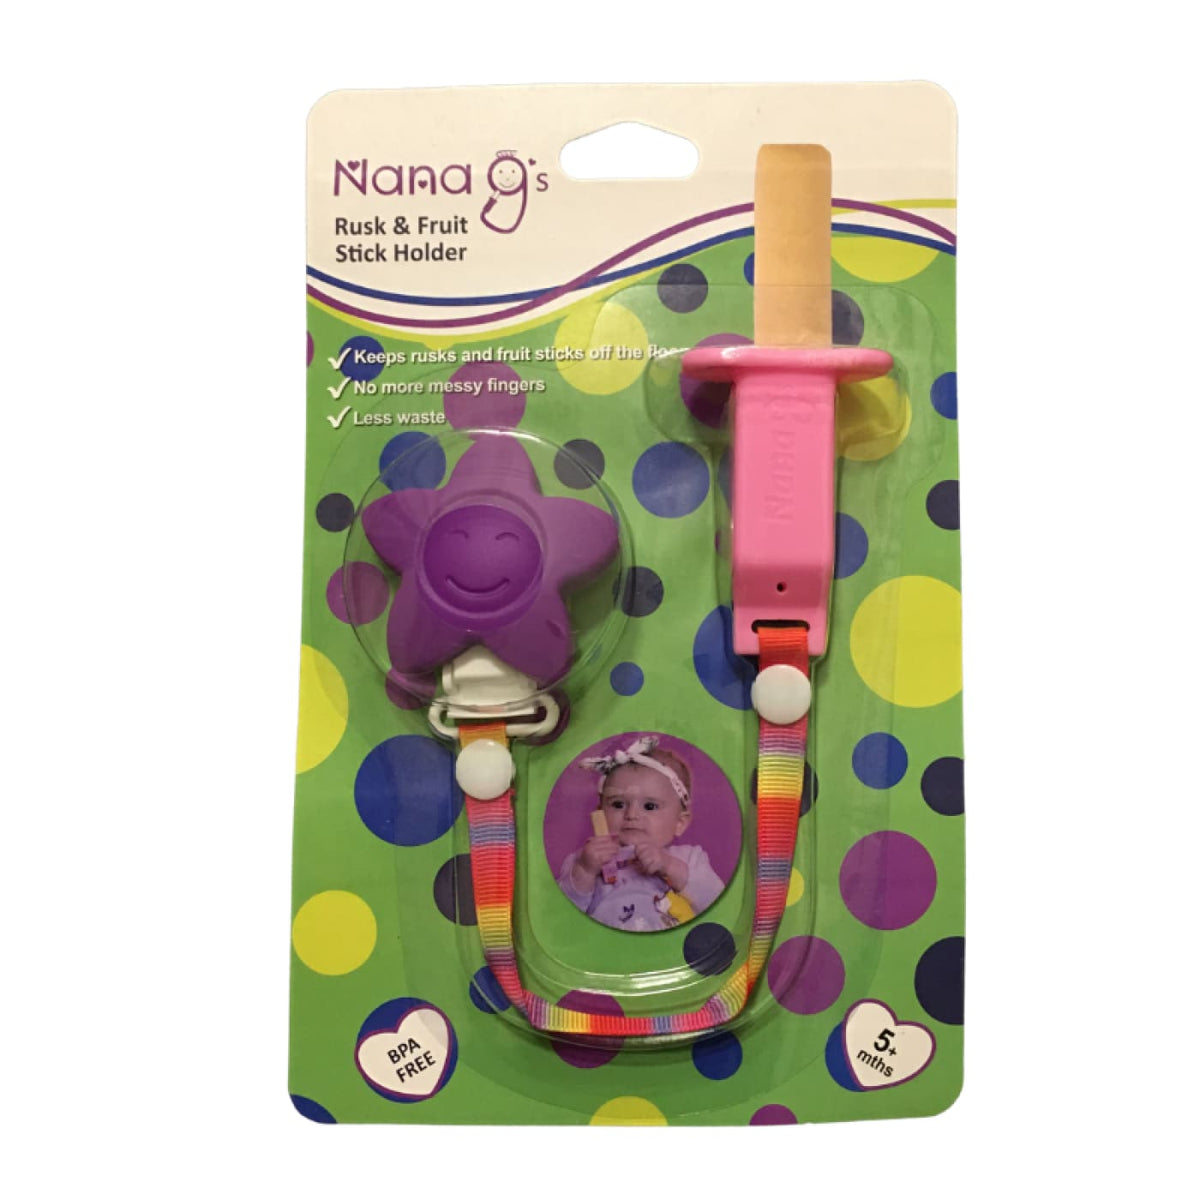 Nana gs Rusk &amp; Fruit Stick Holder - Pink/Purple - pink/purple - NURSING &amp; FEEDING - CONTAINERS/FEEDERS